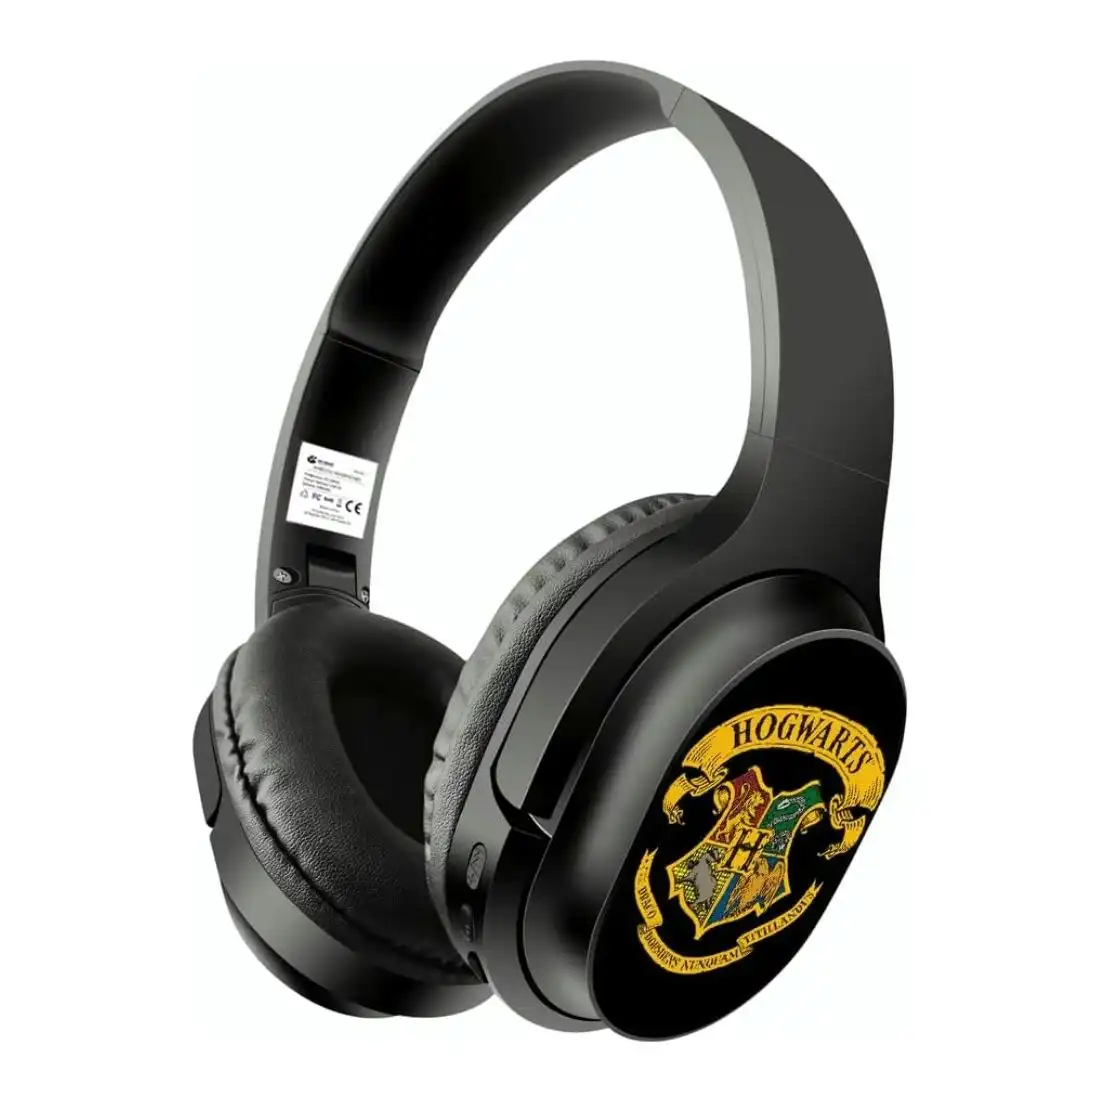 ERT Group Wireless Stereo Headphones with mic Harry Potter 037 - Black